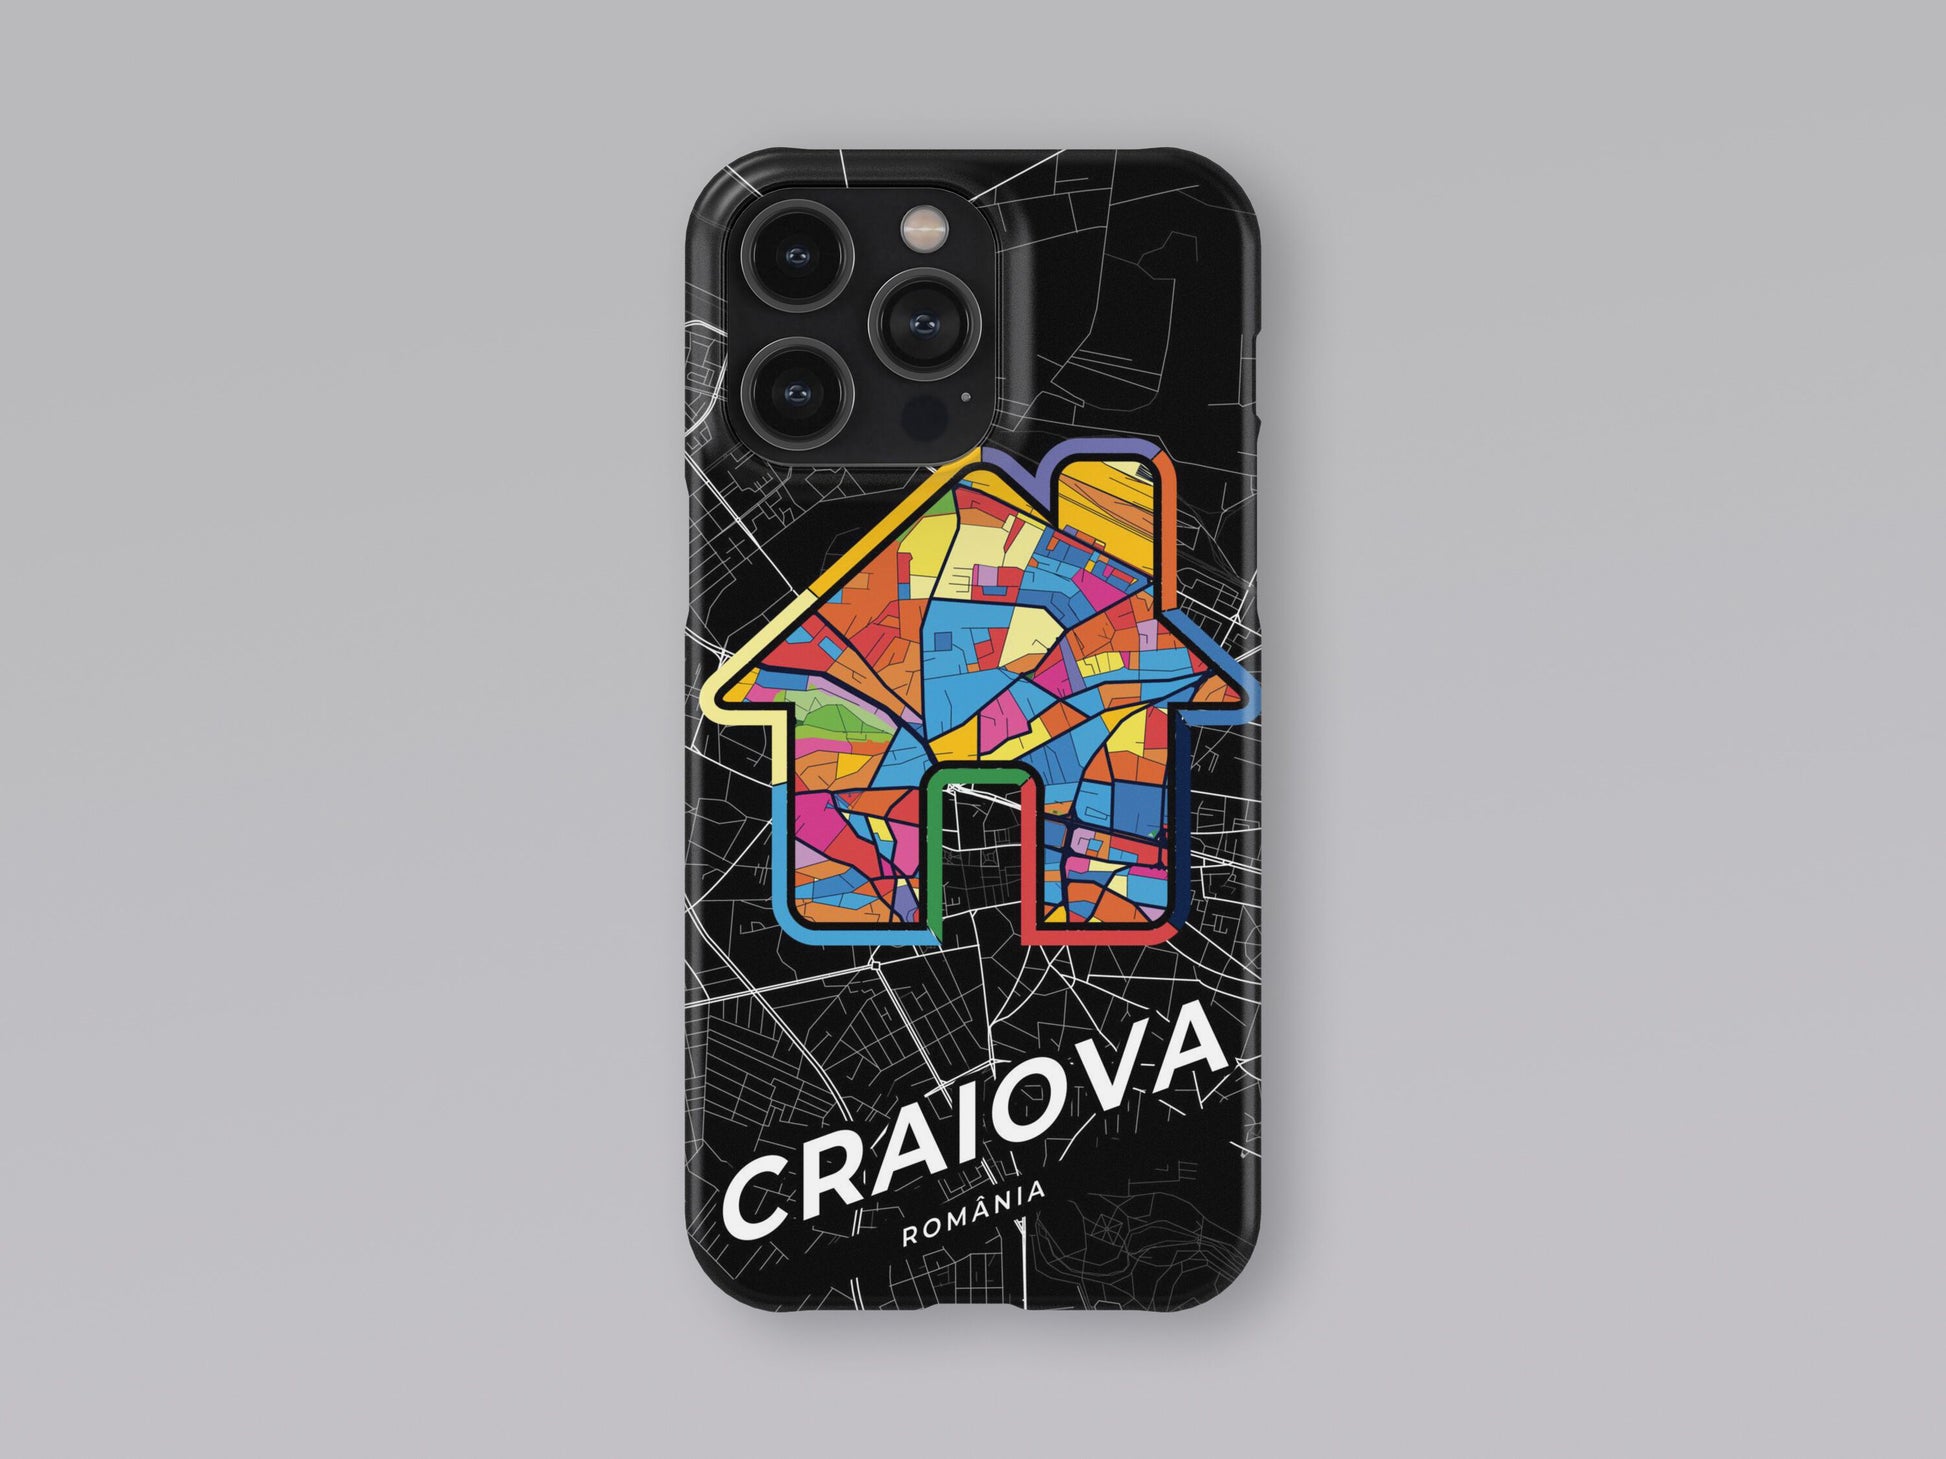 Craiova Romania slim phone case with colorful icon. Birthday, wedding or housewarming gift. Couple match cases. 3